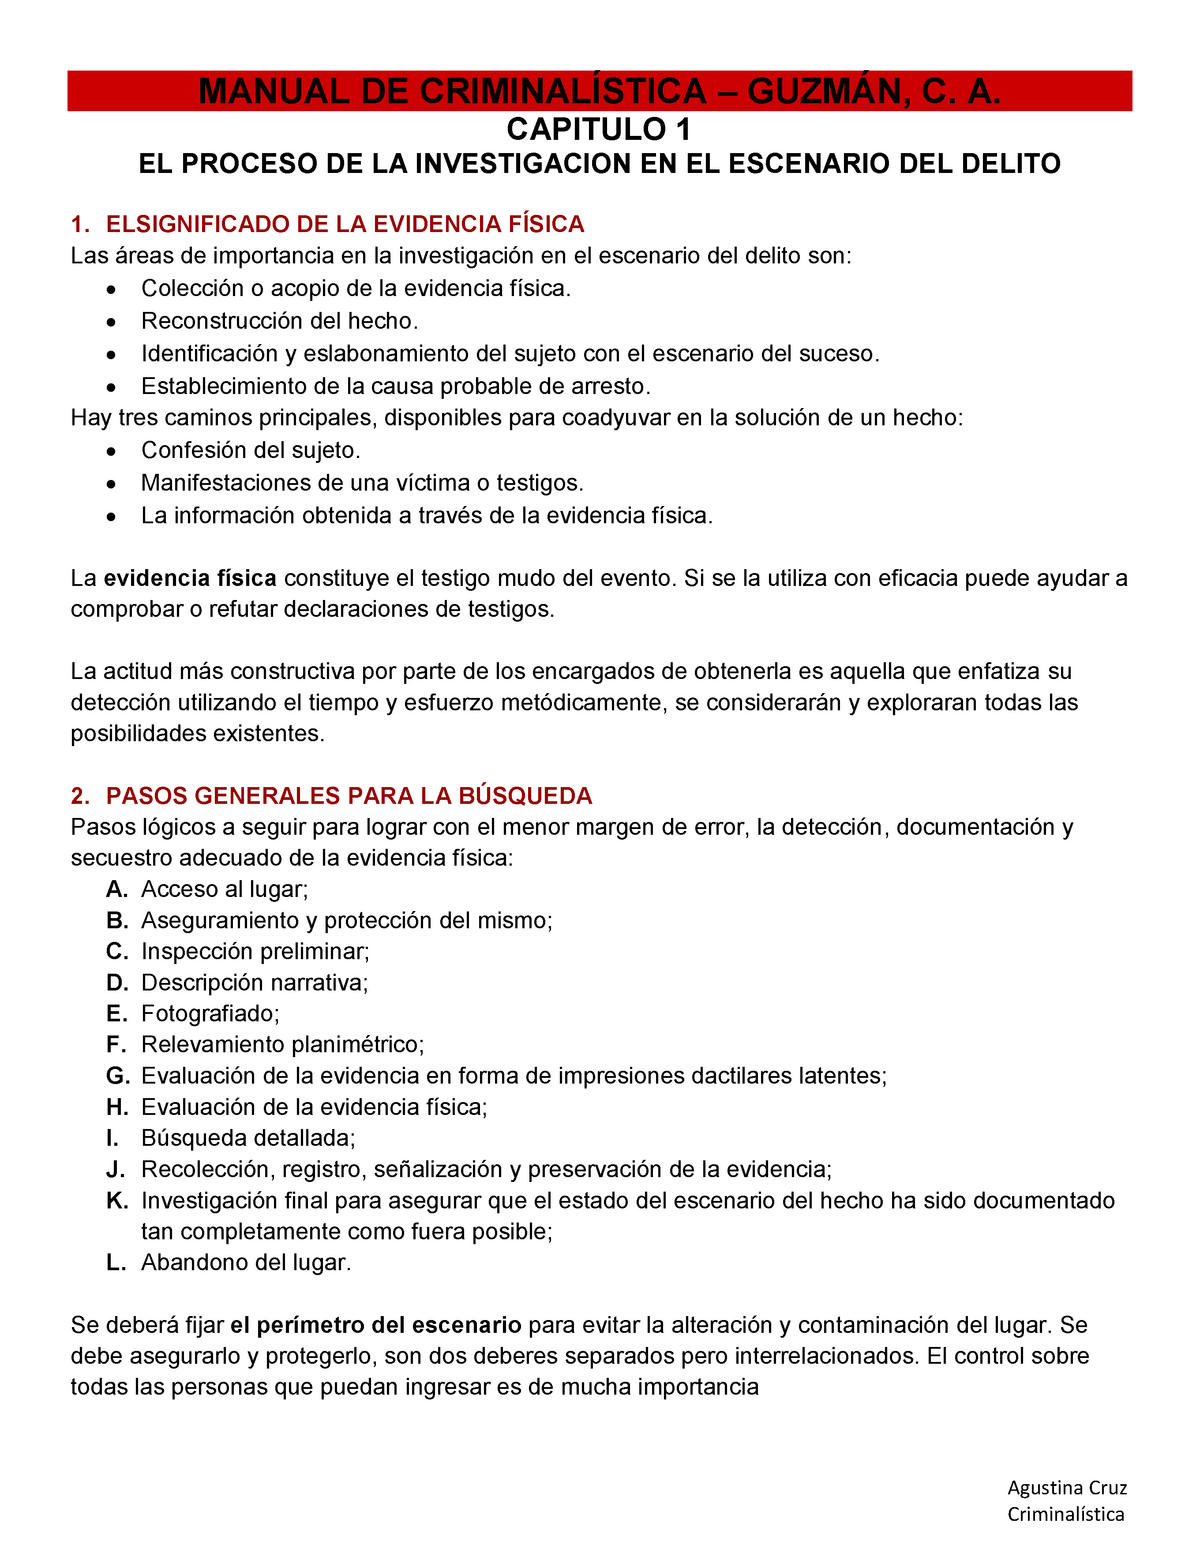 Manual De Criminalistica 1 Agustina Cruz Manual De CriminalÍstica GuzmÁn C A Capitulo 1 3300